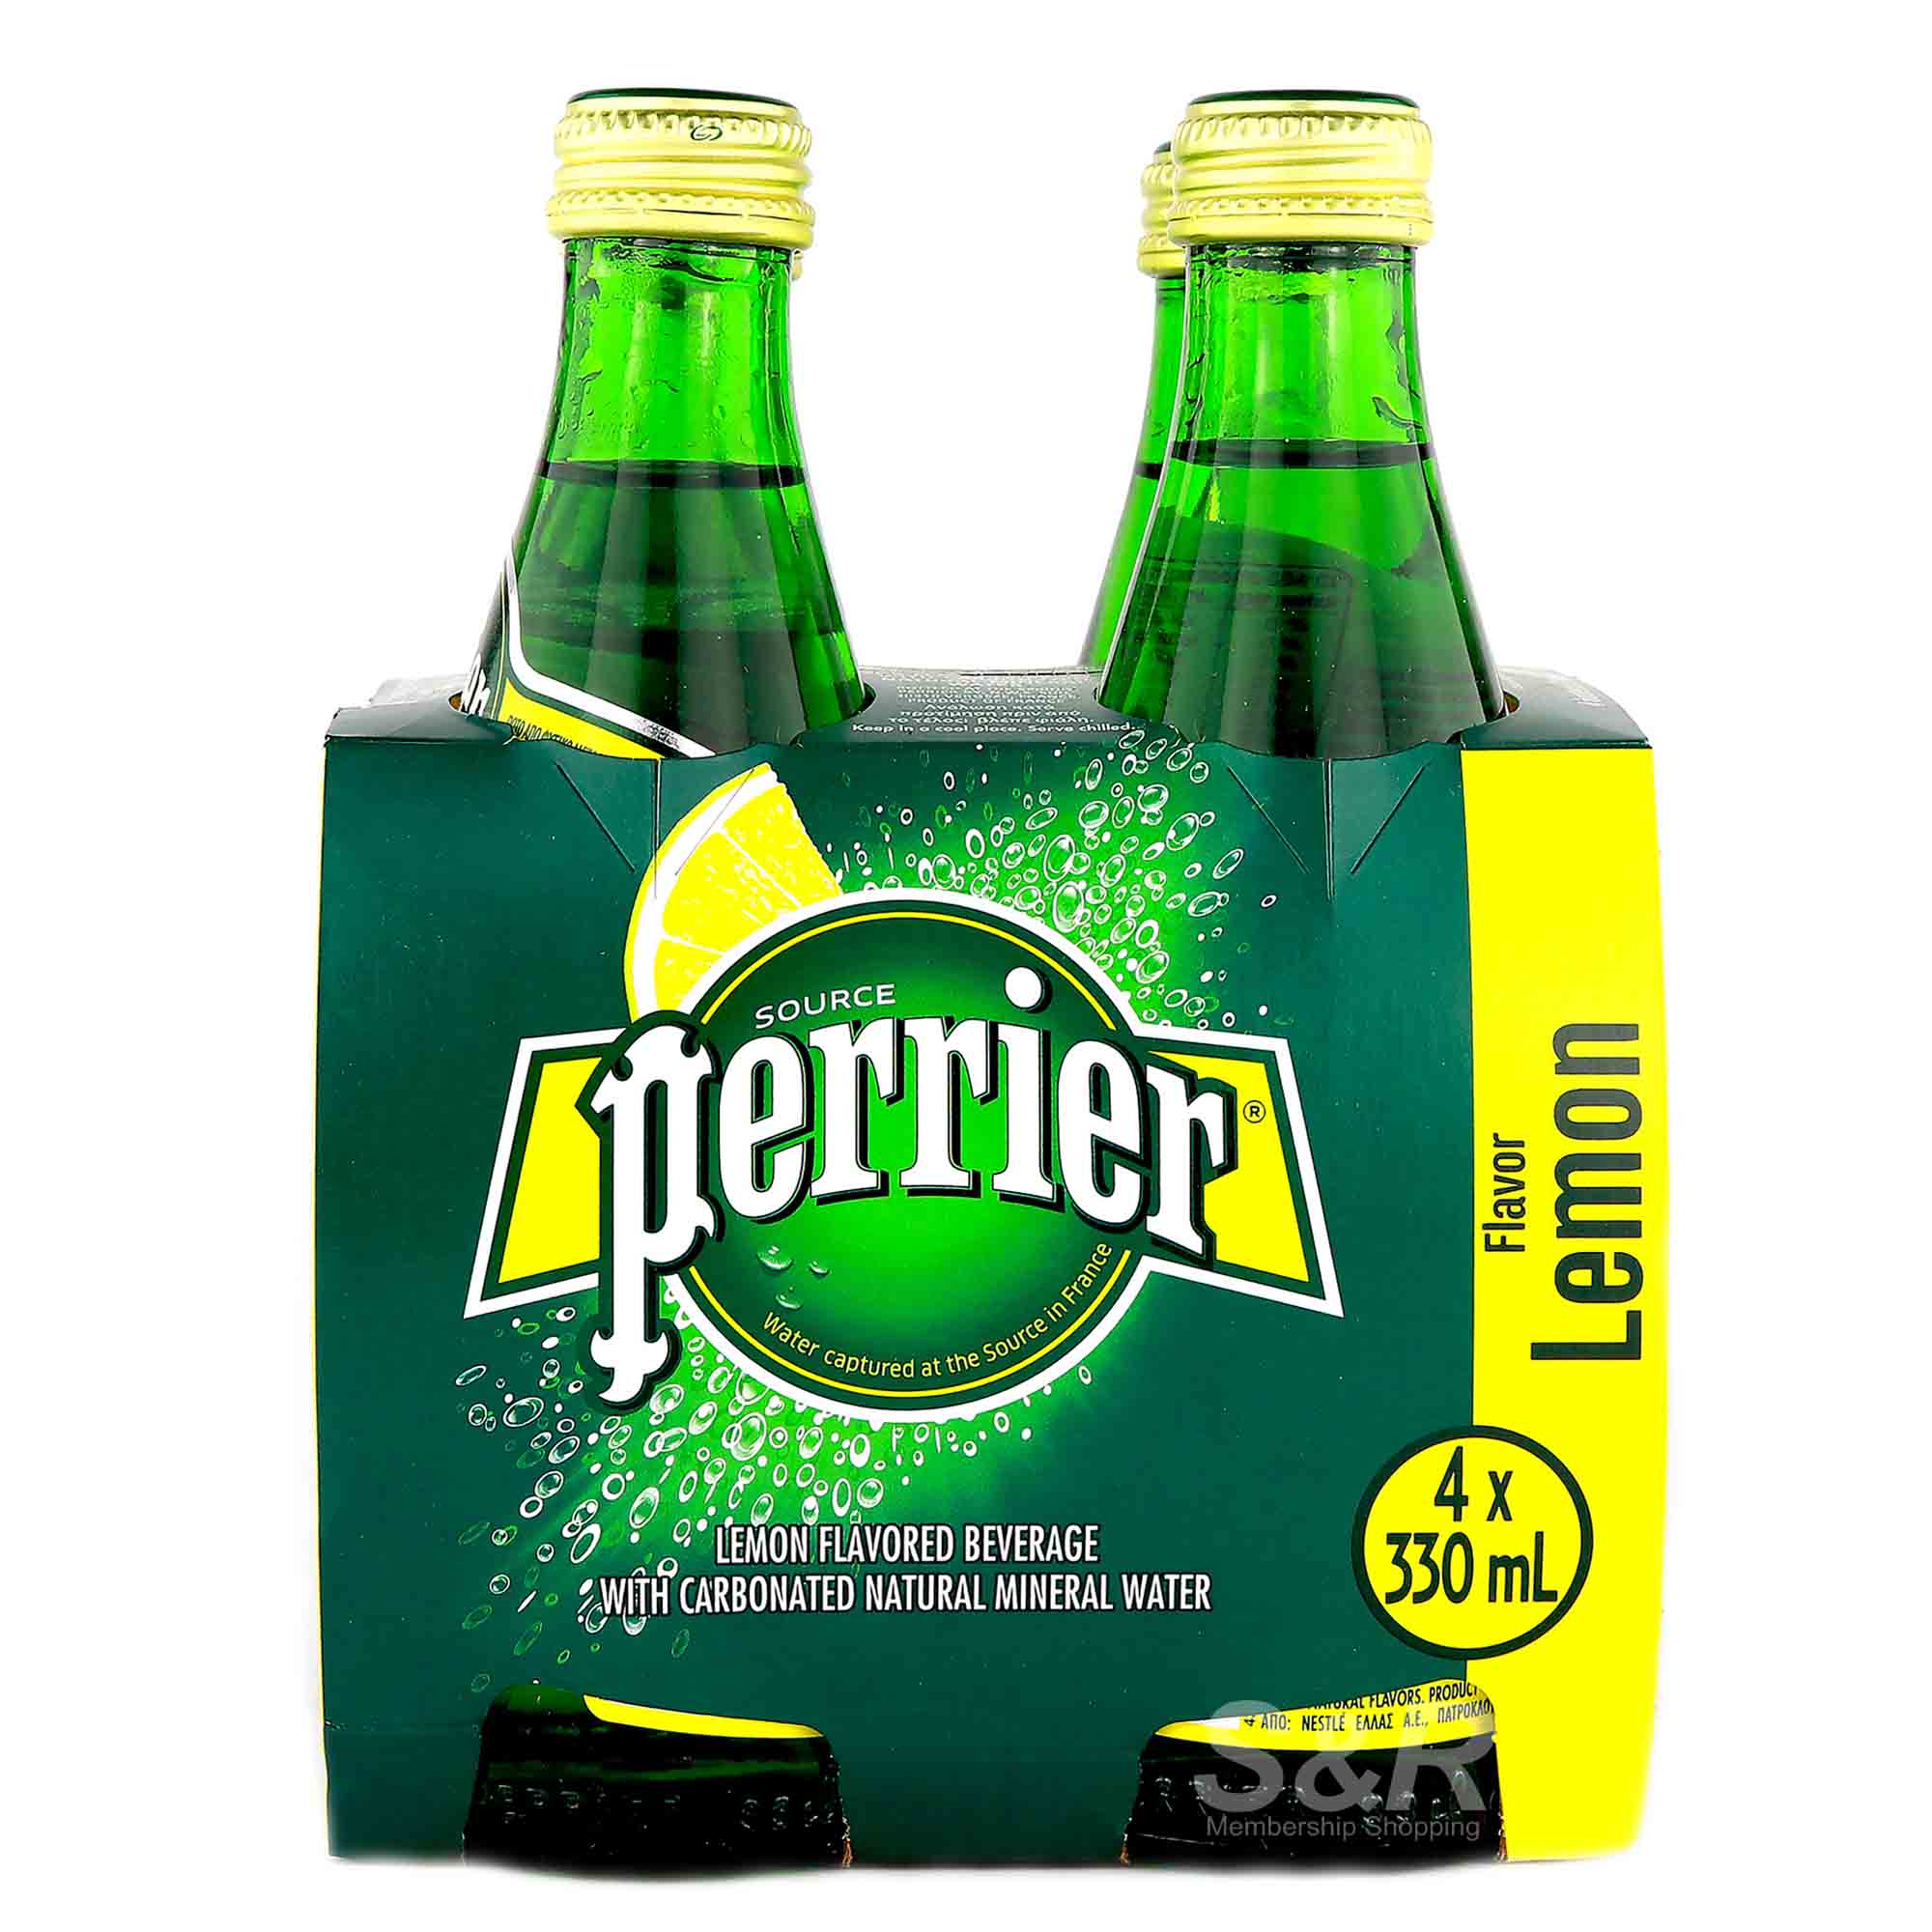 Perrier Lemon Flavored Beverage with Carbonated Natural Mineral Water 4 bottles